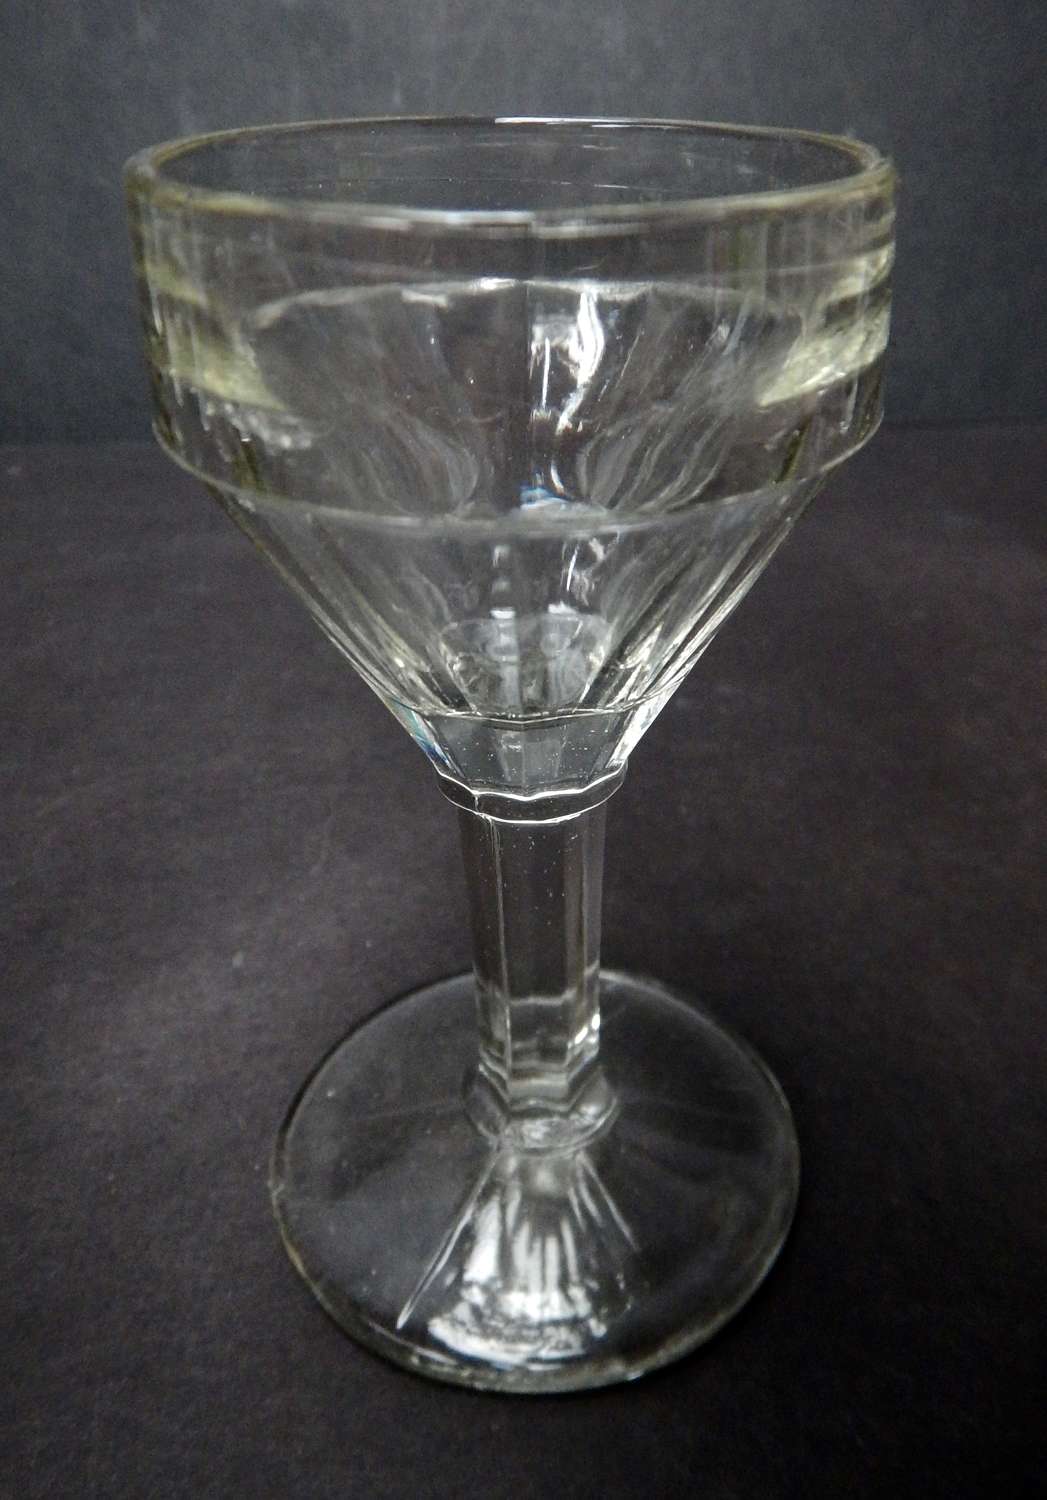 Six Shot Glasses or Liqueur Glasses - ANTIQUE French 1900s Glasses